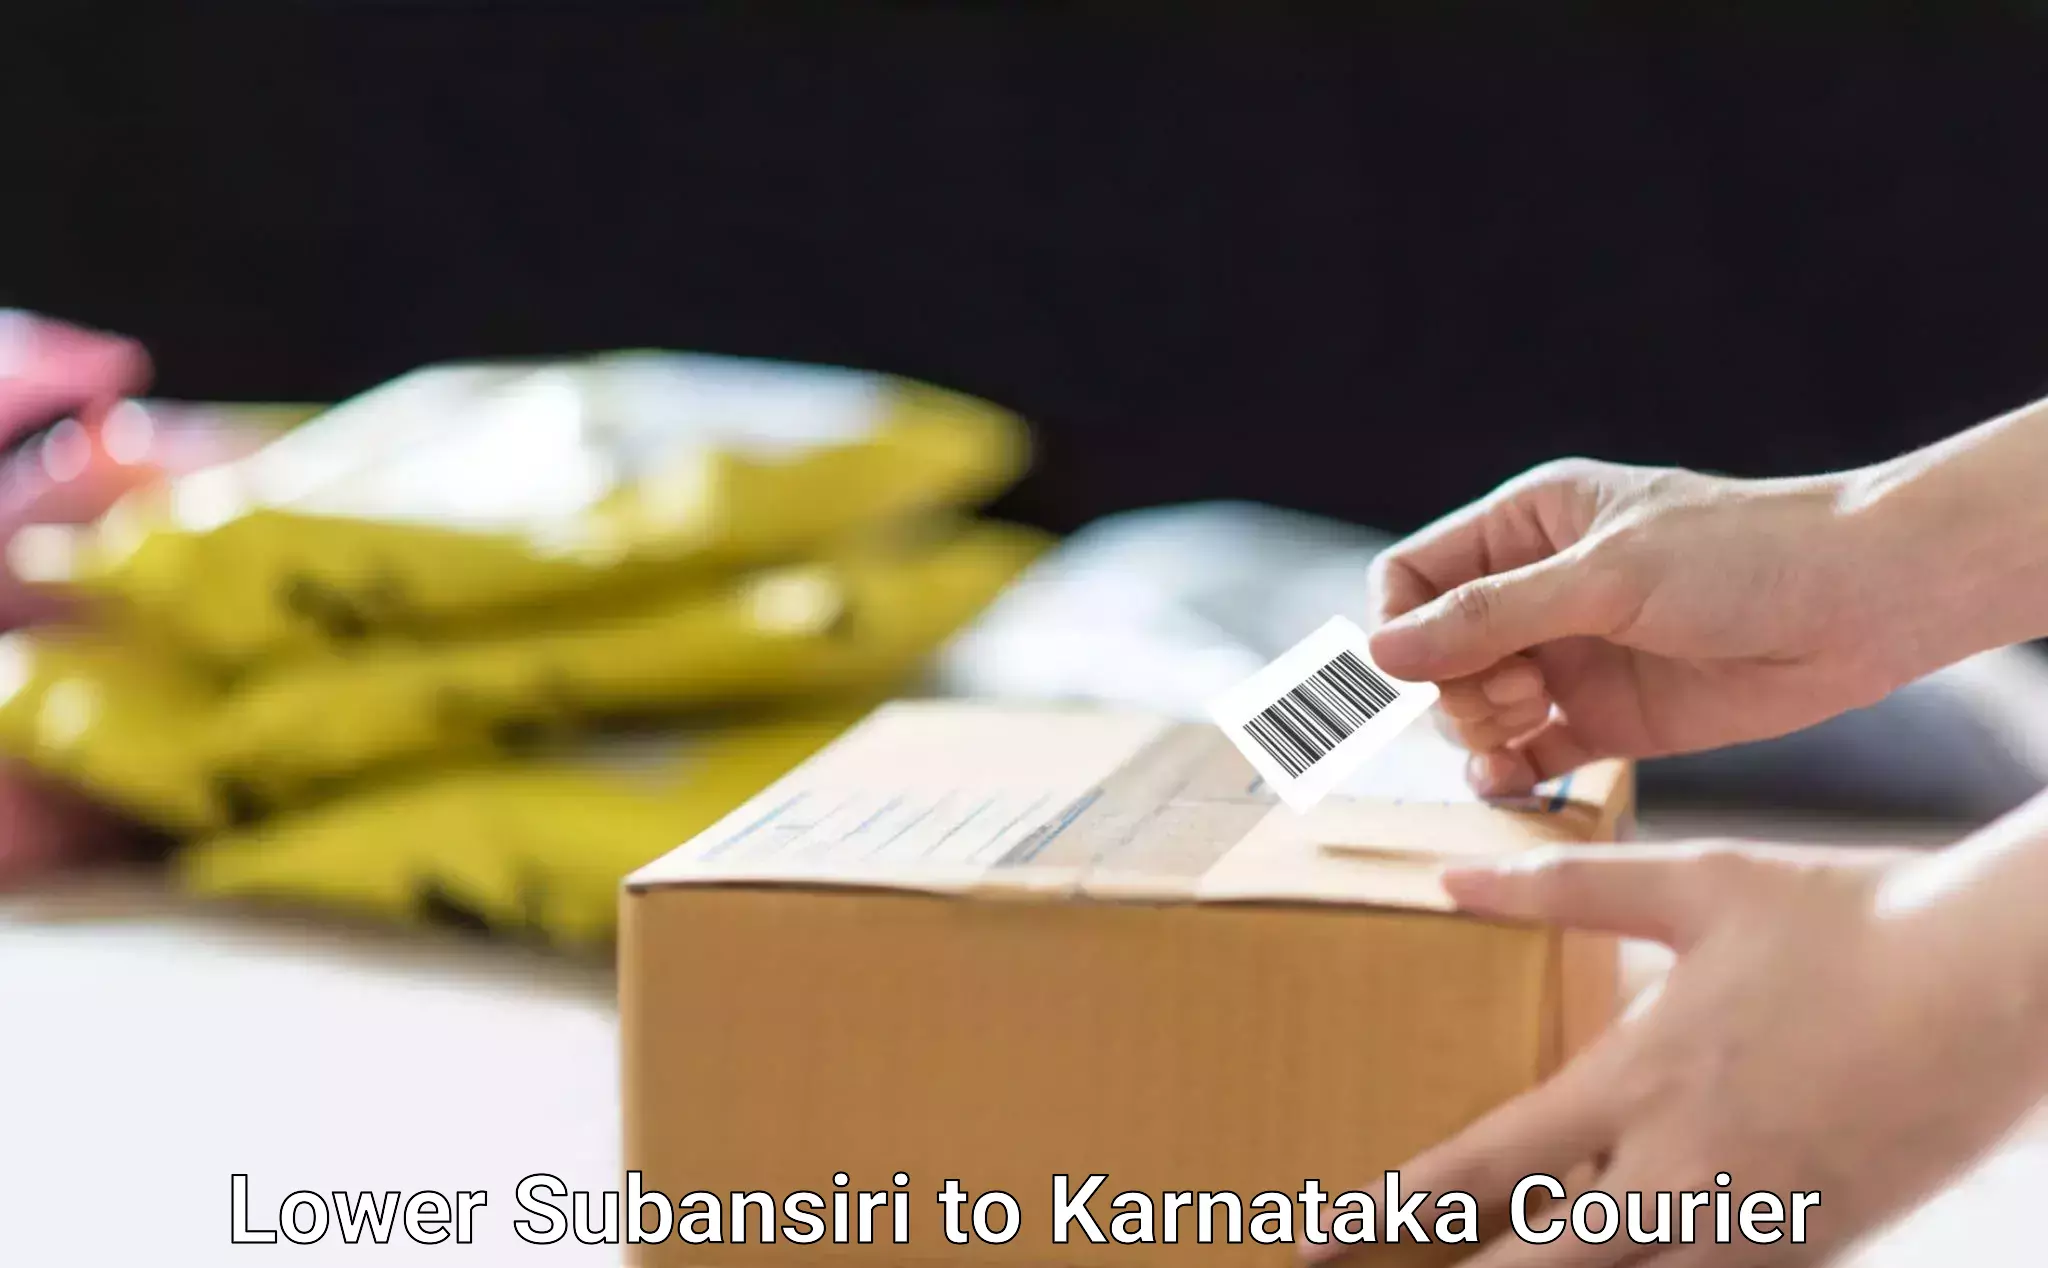 Sustainable courier practices Lower Subansiri to Karnataka